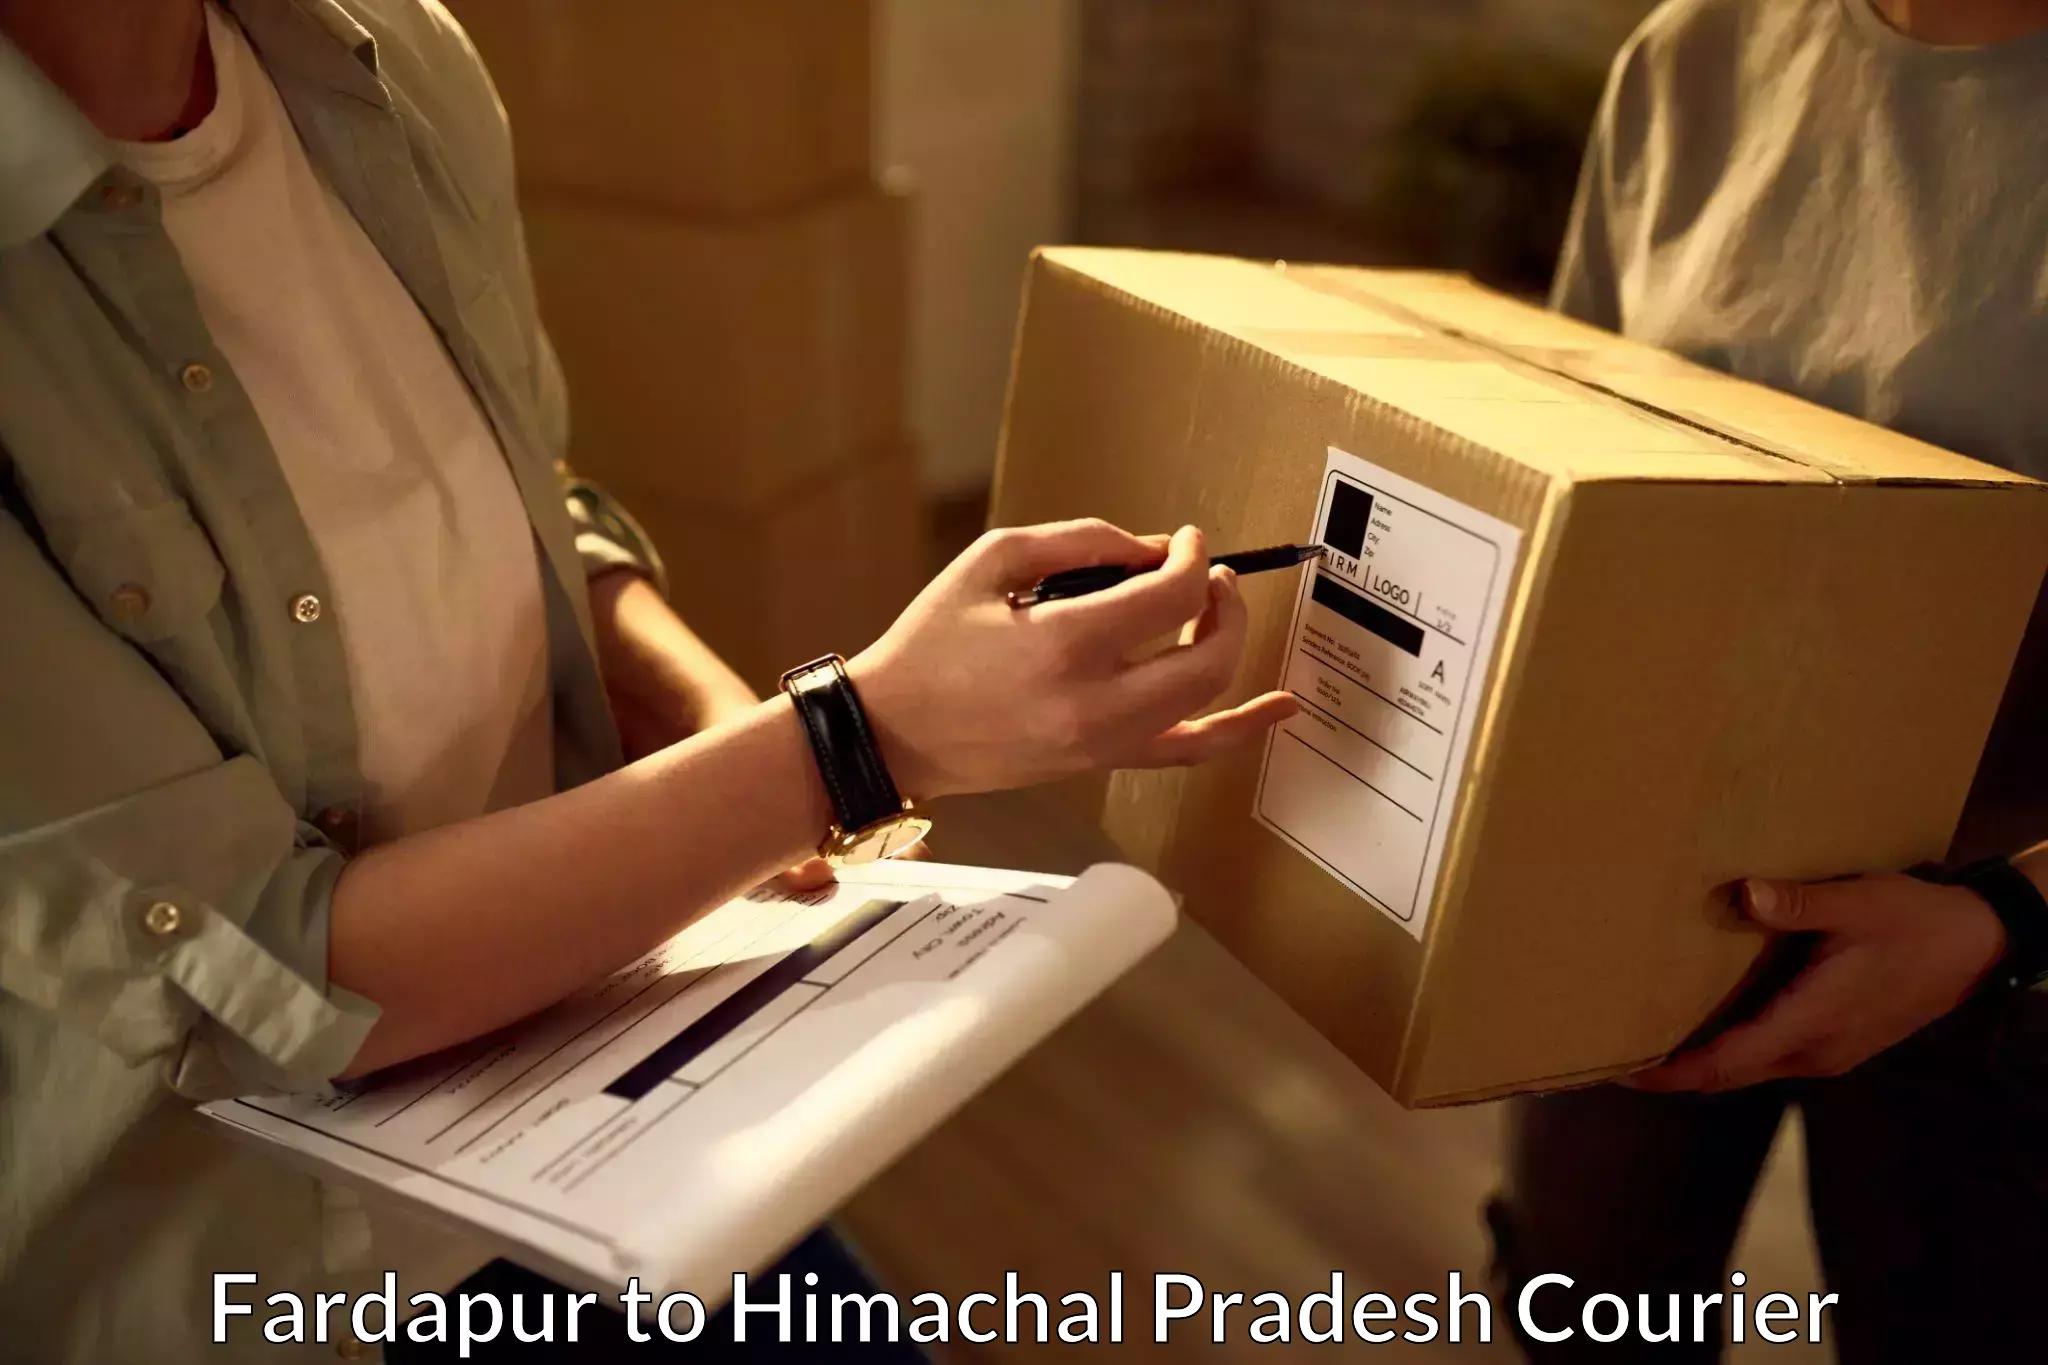 User-friendly delivery service Fardapur to Himachal Pradesh